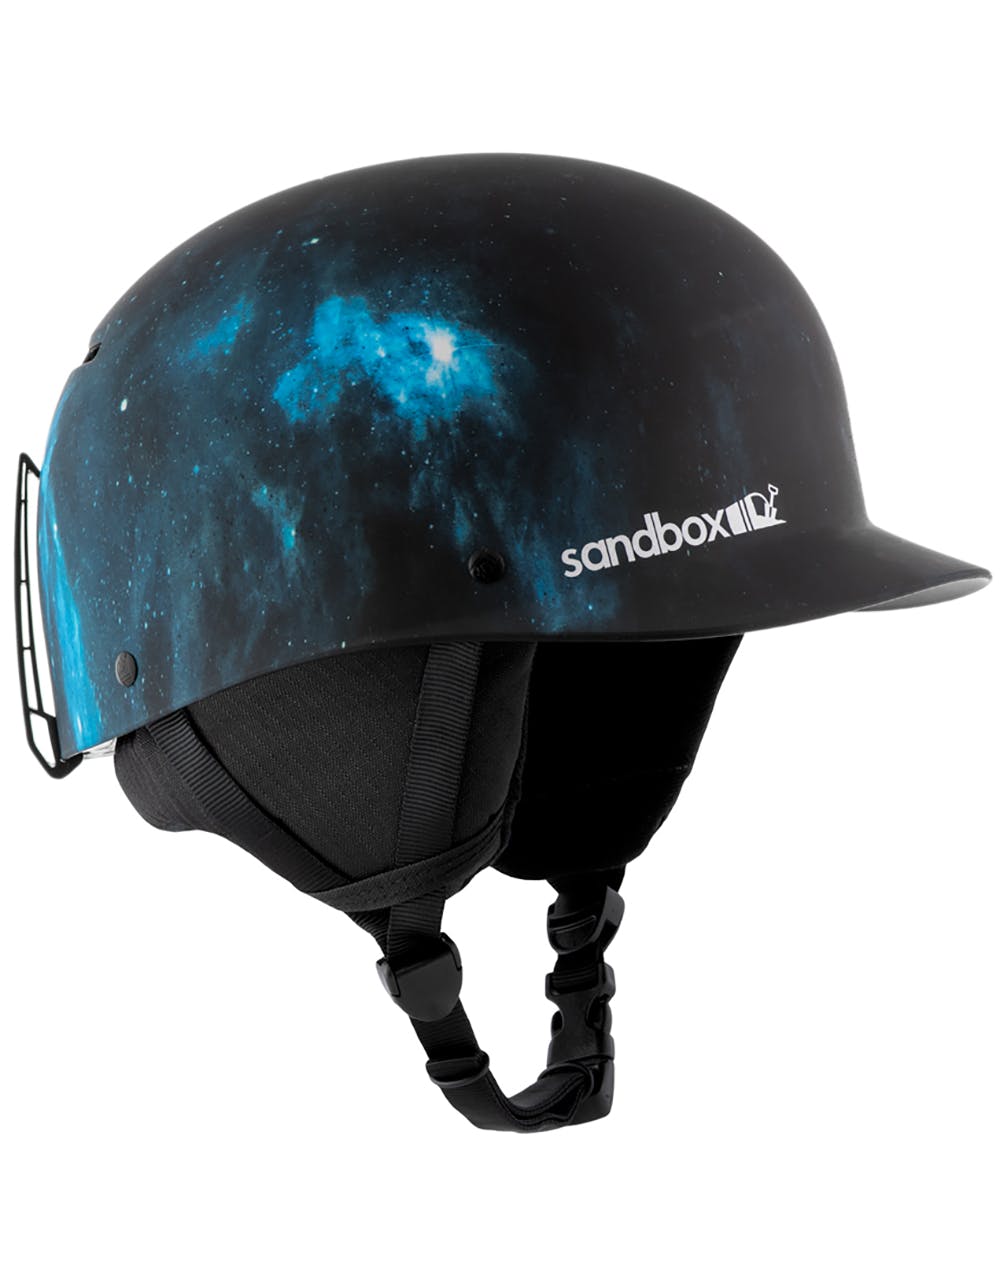 Sandbox Classic 2.0 Snowboard Helmet - Spaced Out